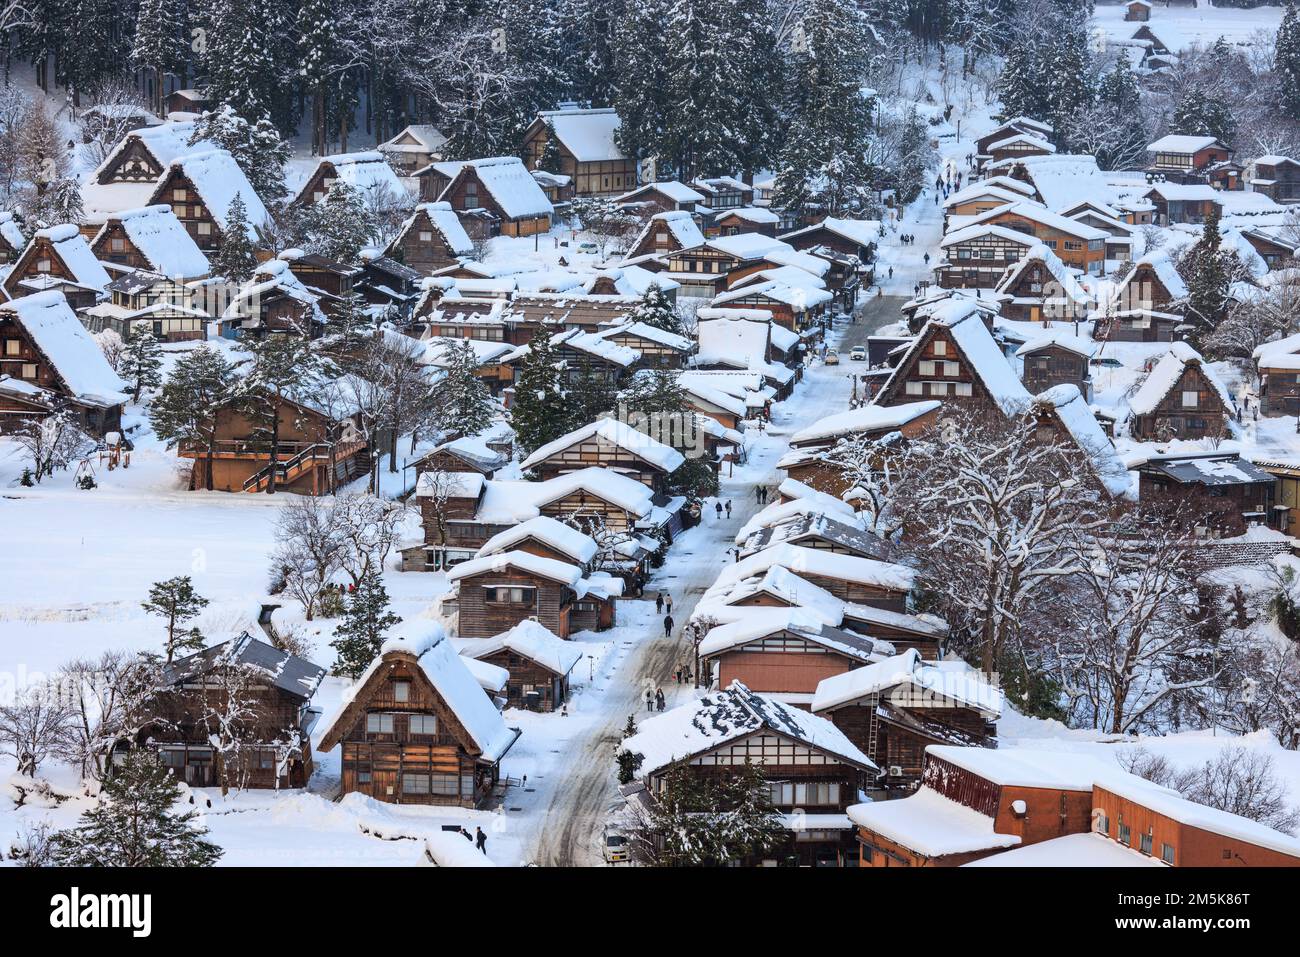 Main street through historic mountain village covered in snow Stock Photo